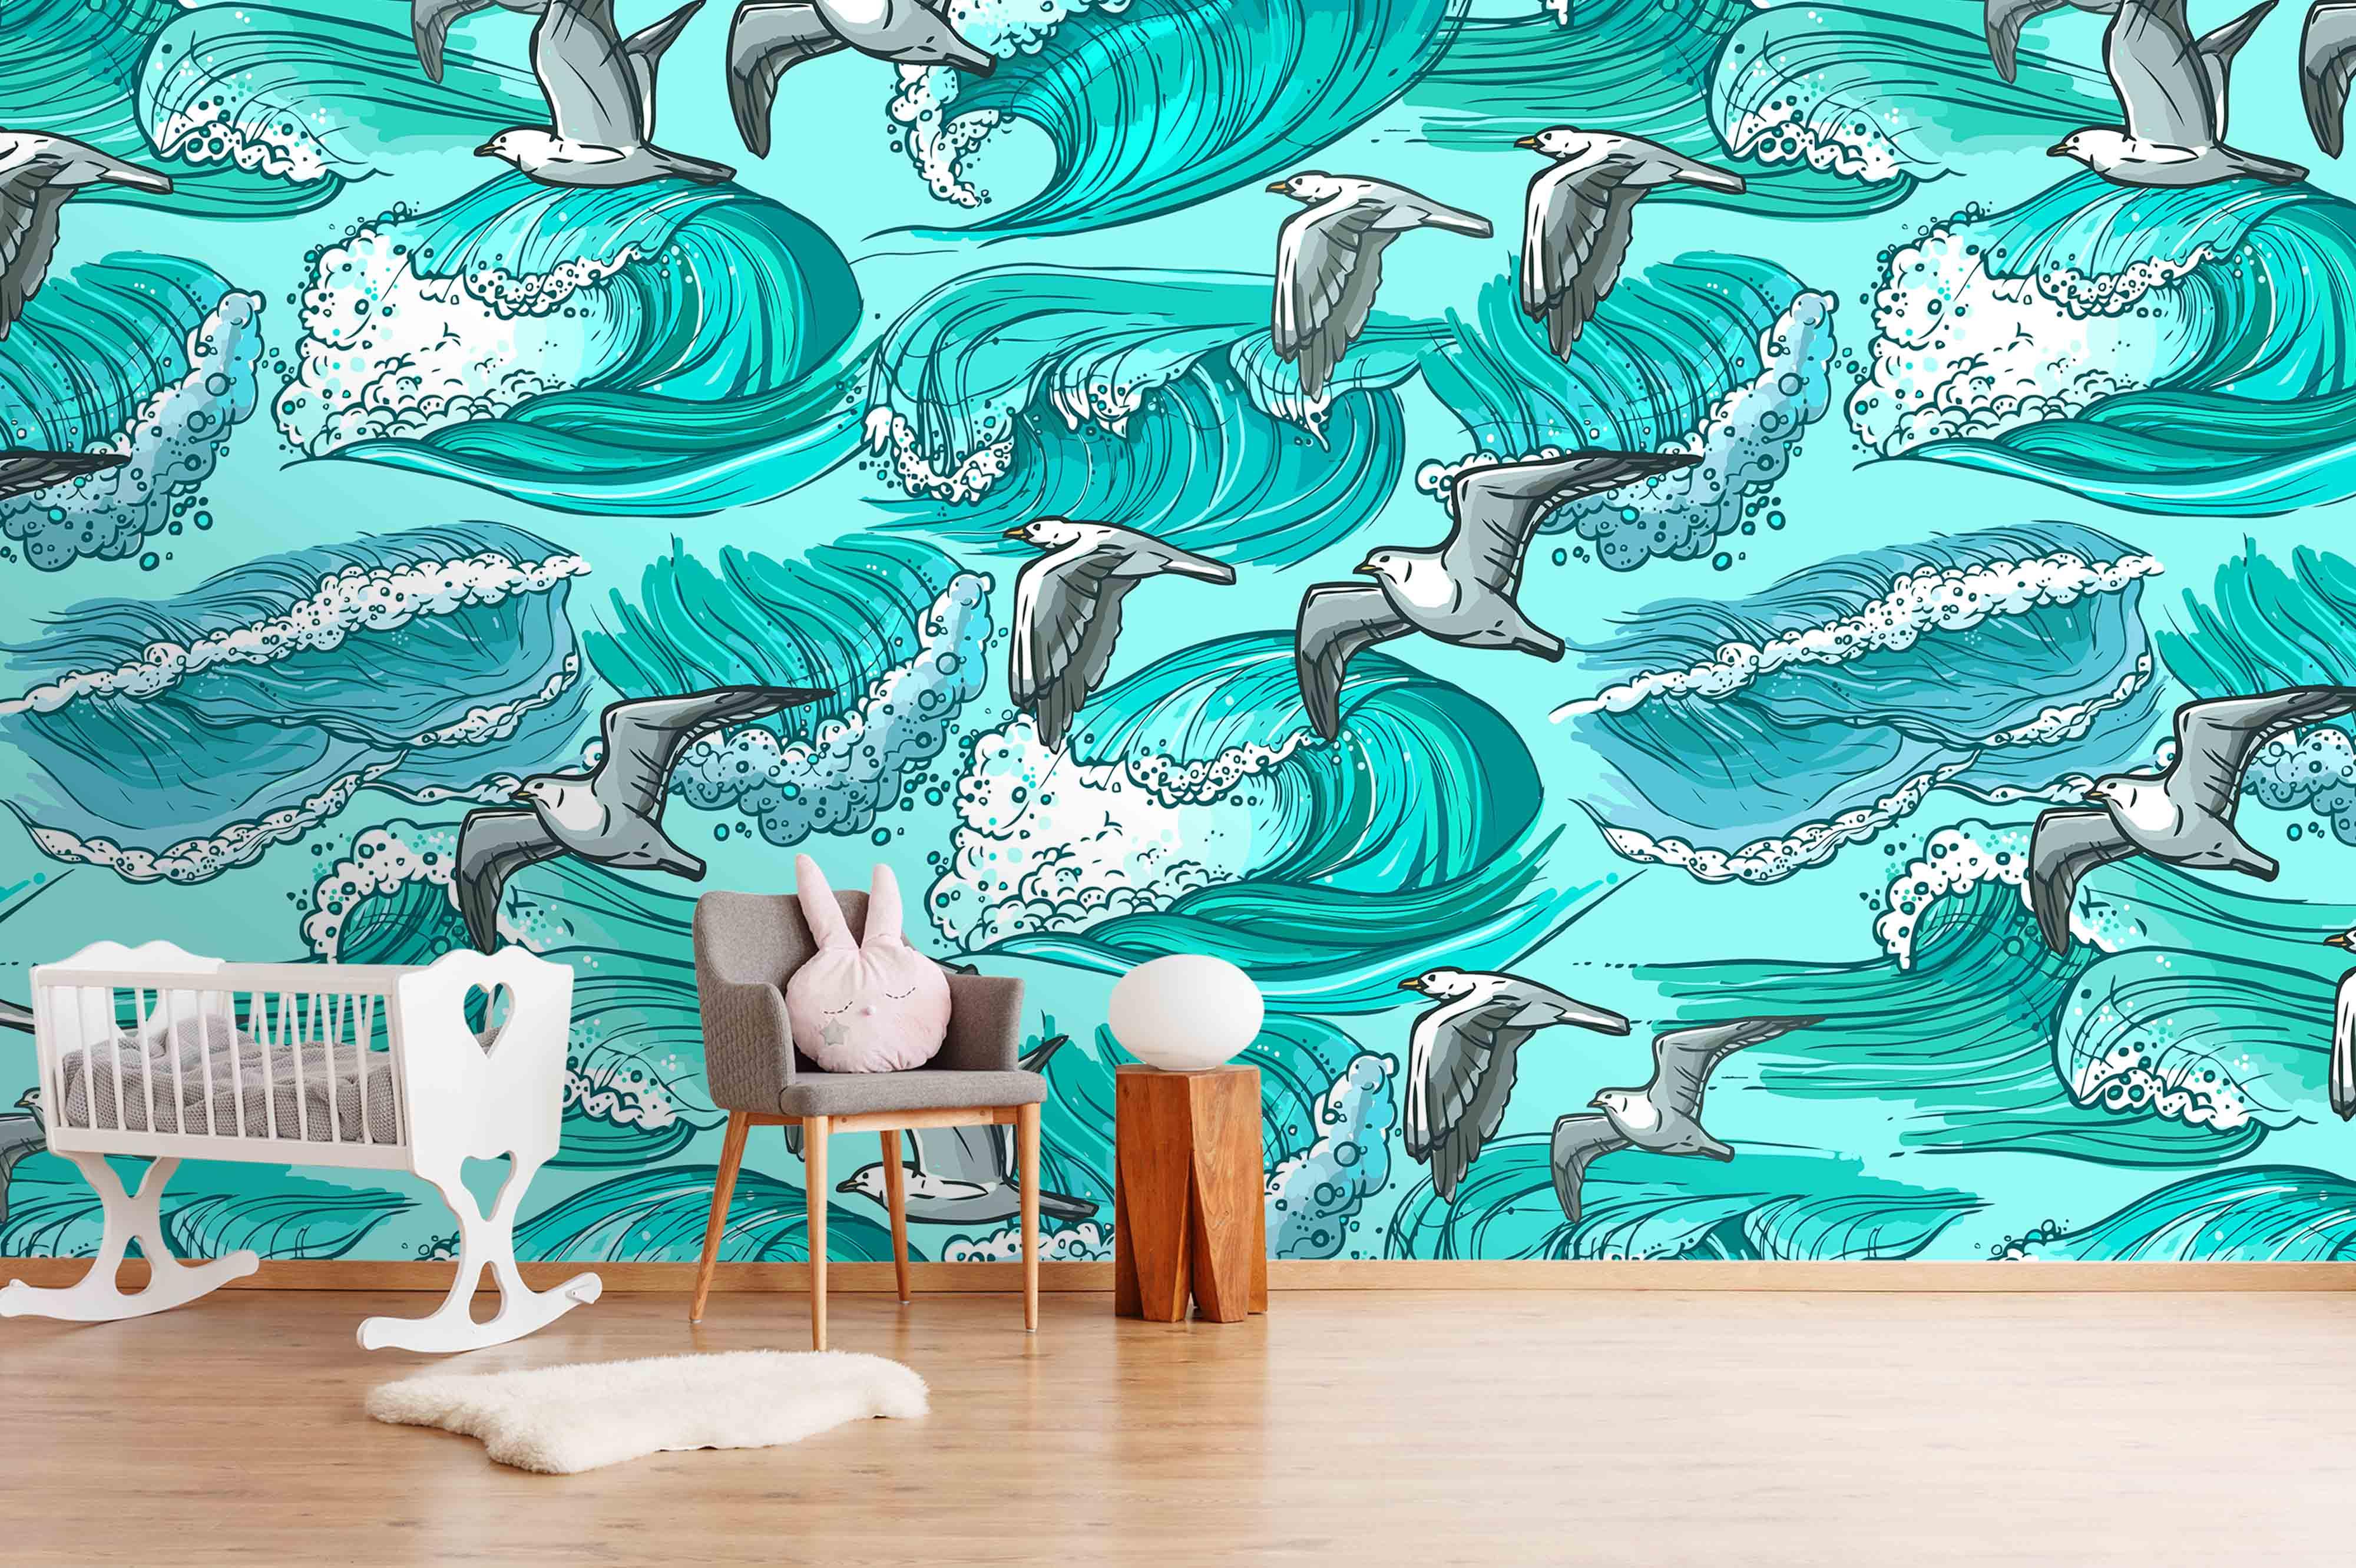 3D abstract sea seagull wall mural wallpaper 44- Jess Art Decoration